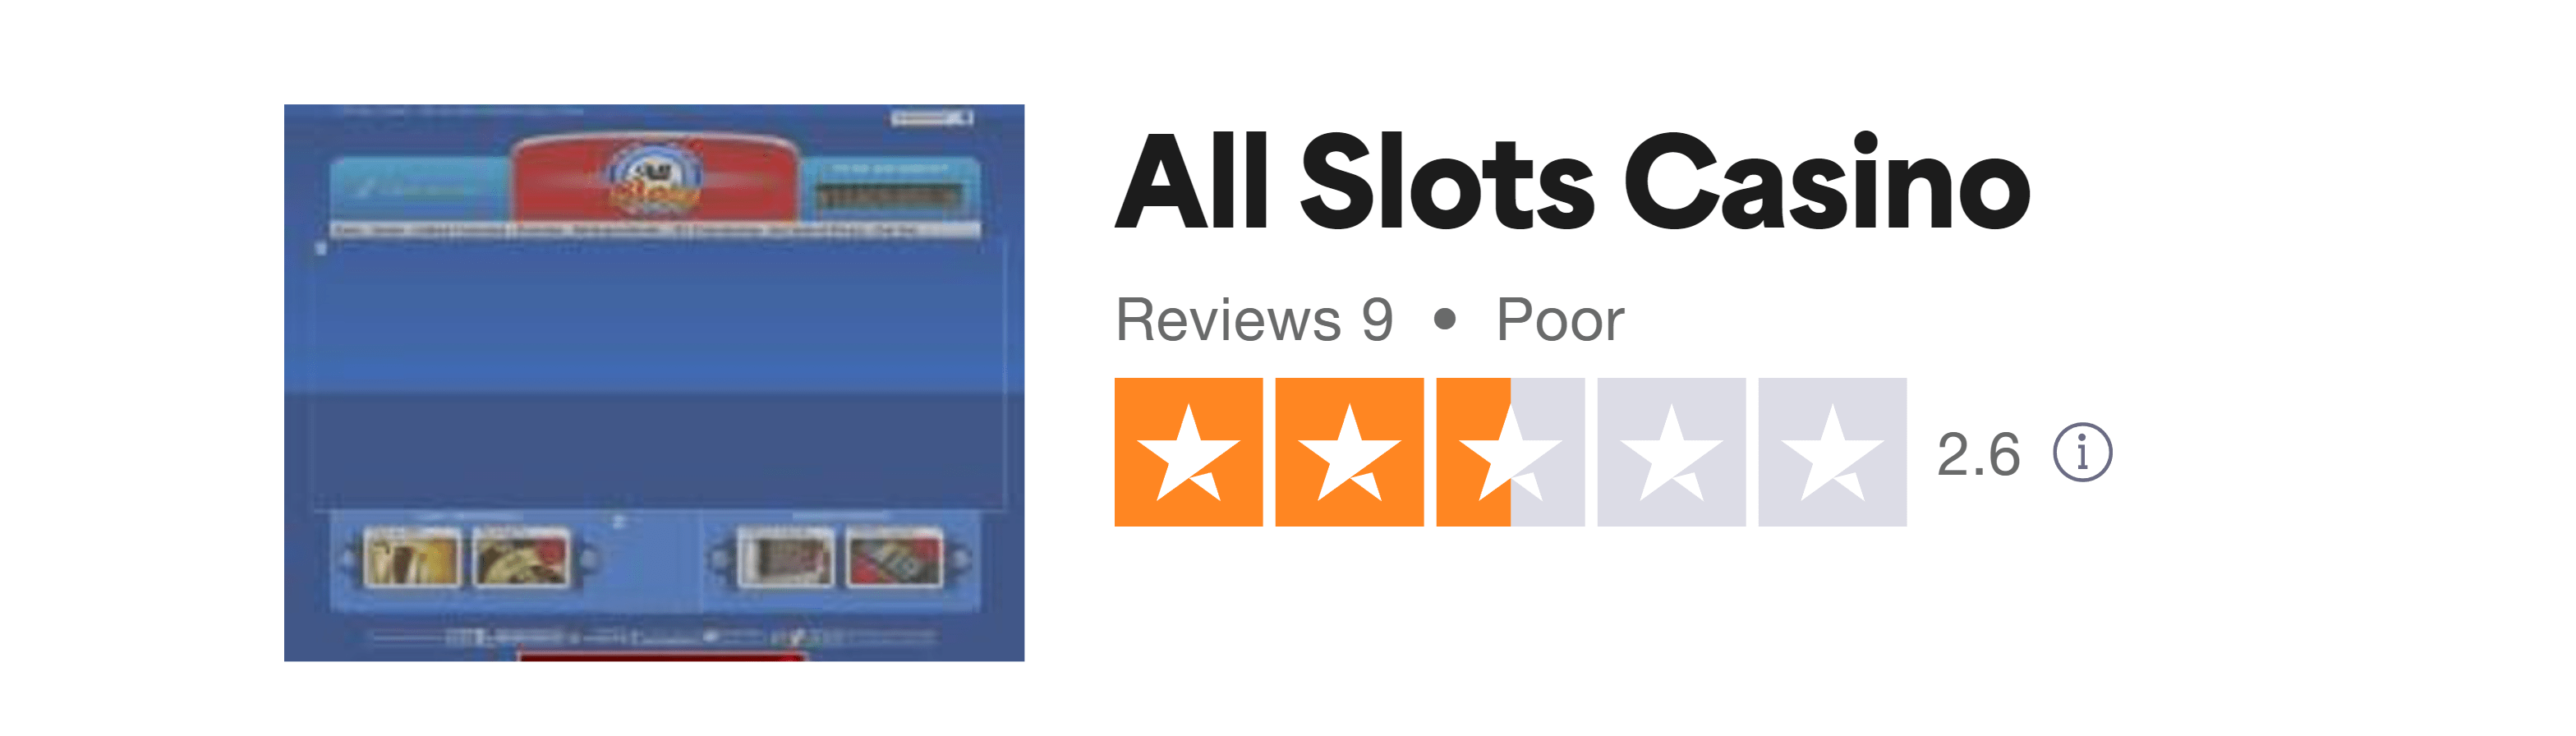 Trustpilot rating screenshot for the All Slots